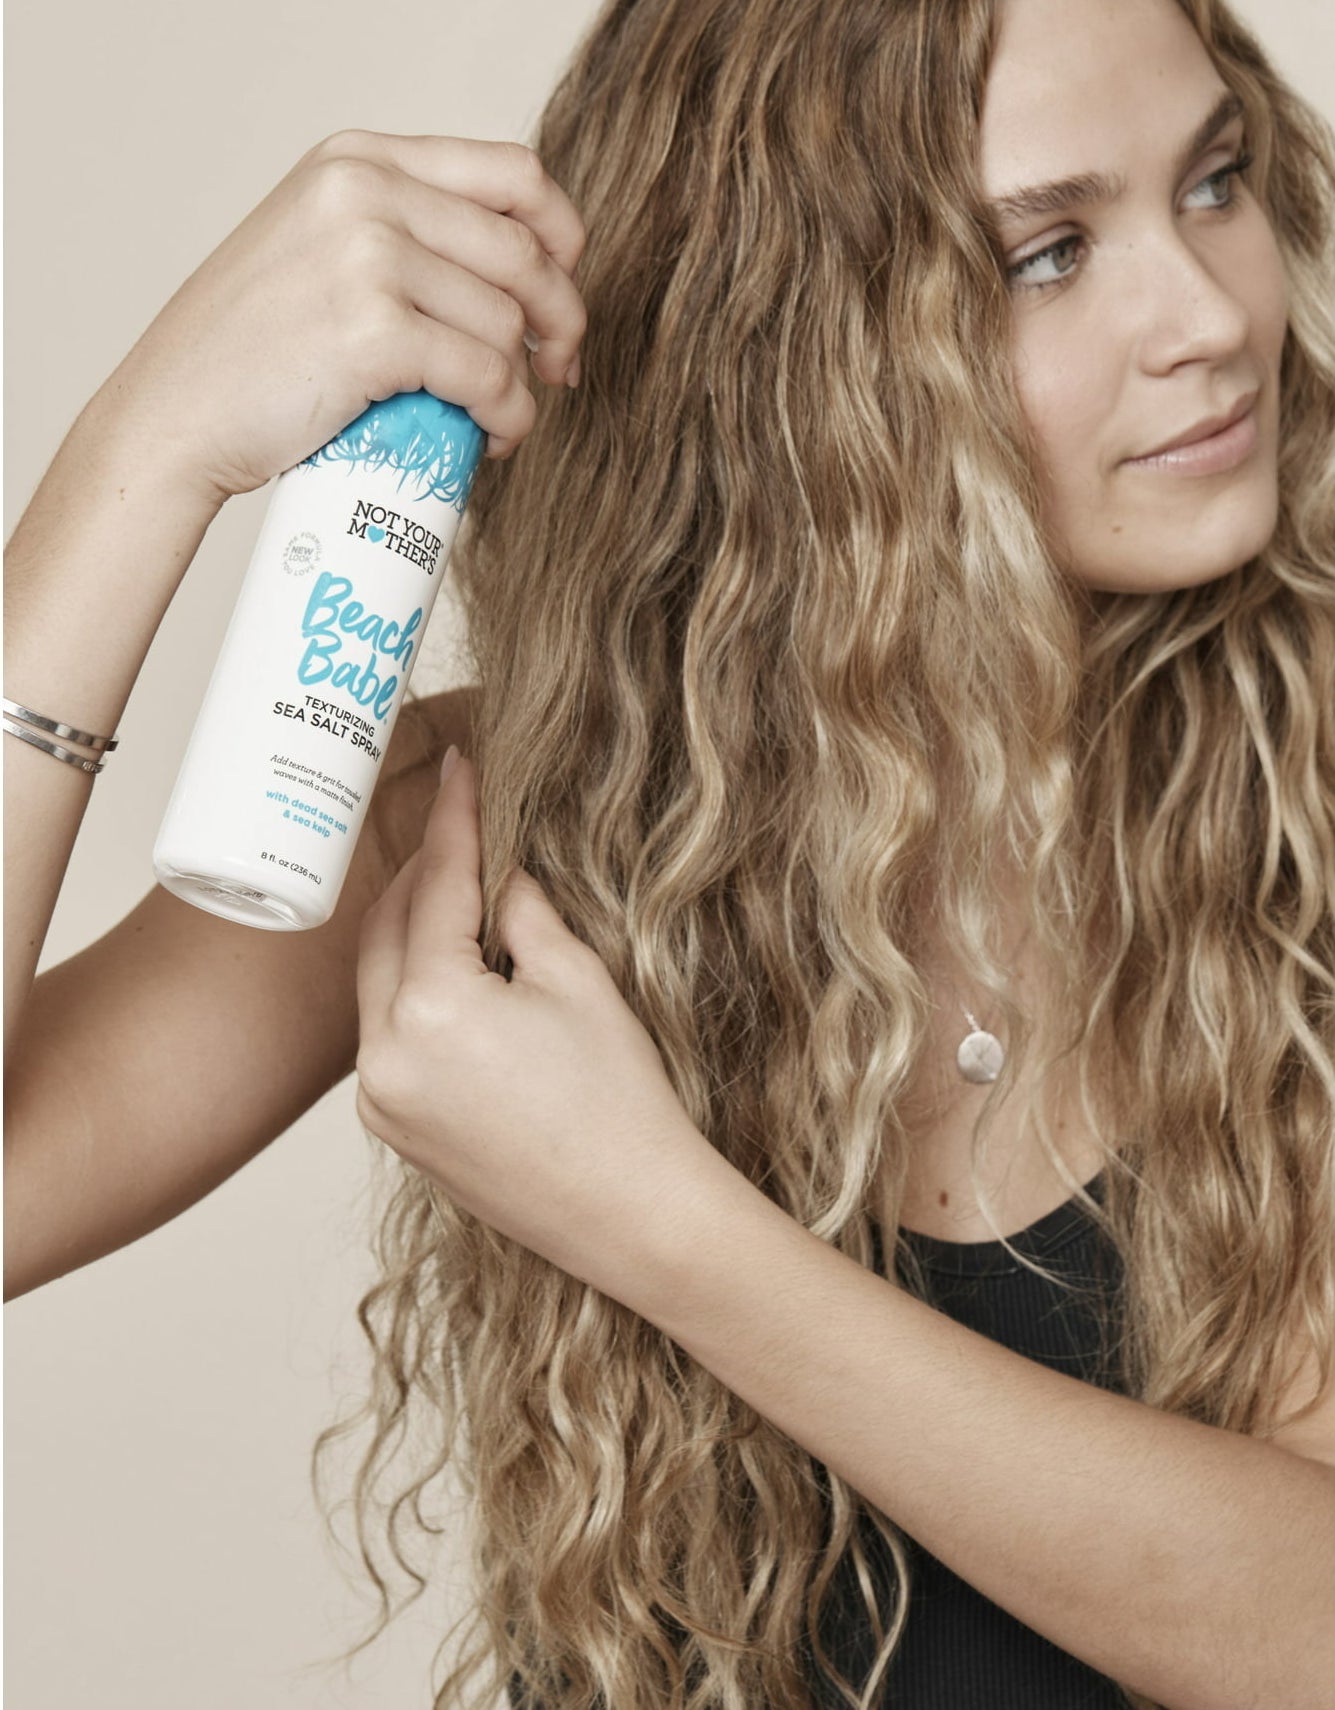 A model using the hair texture spray